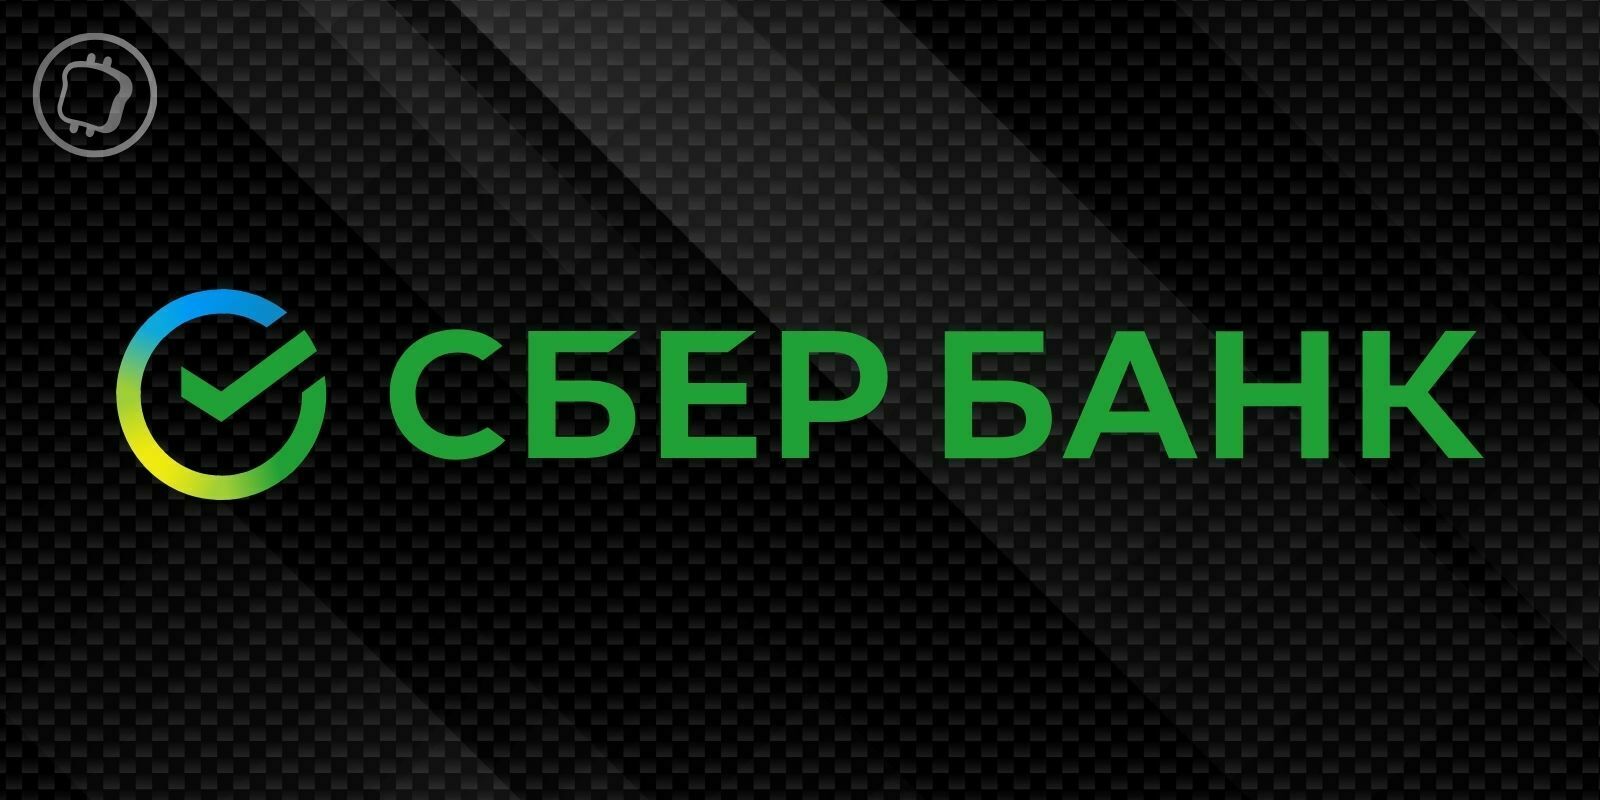 Sberbank : La plus grande banque de Russie lance sa propre blockchain